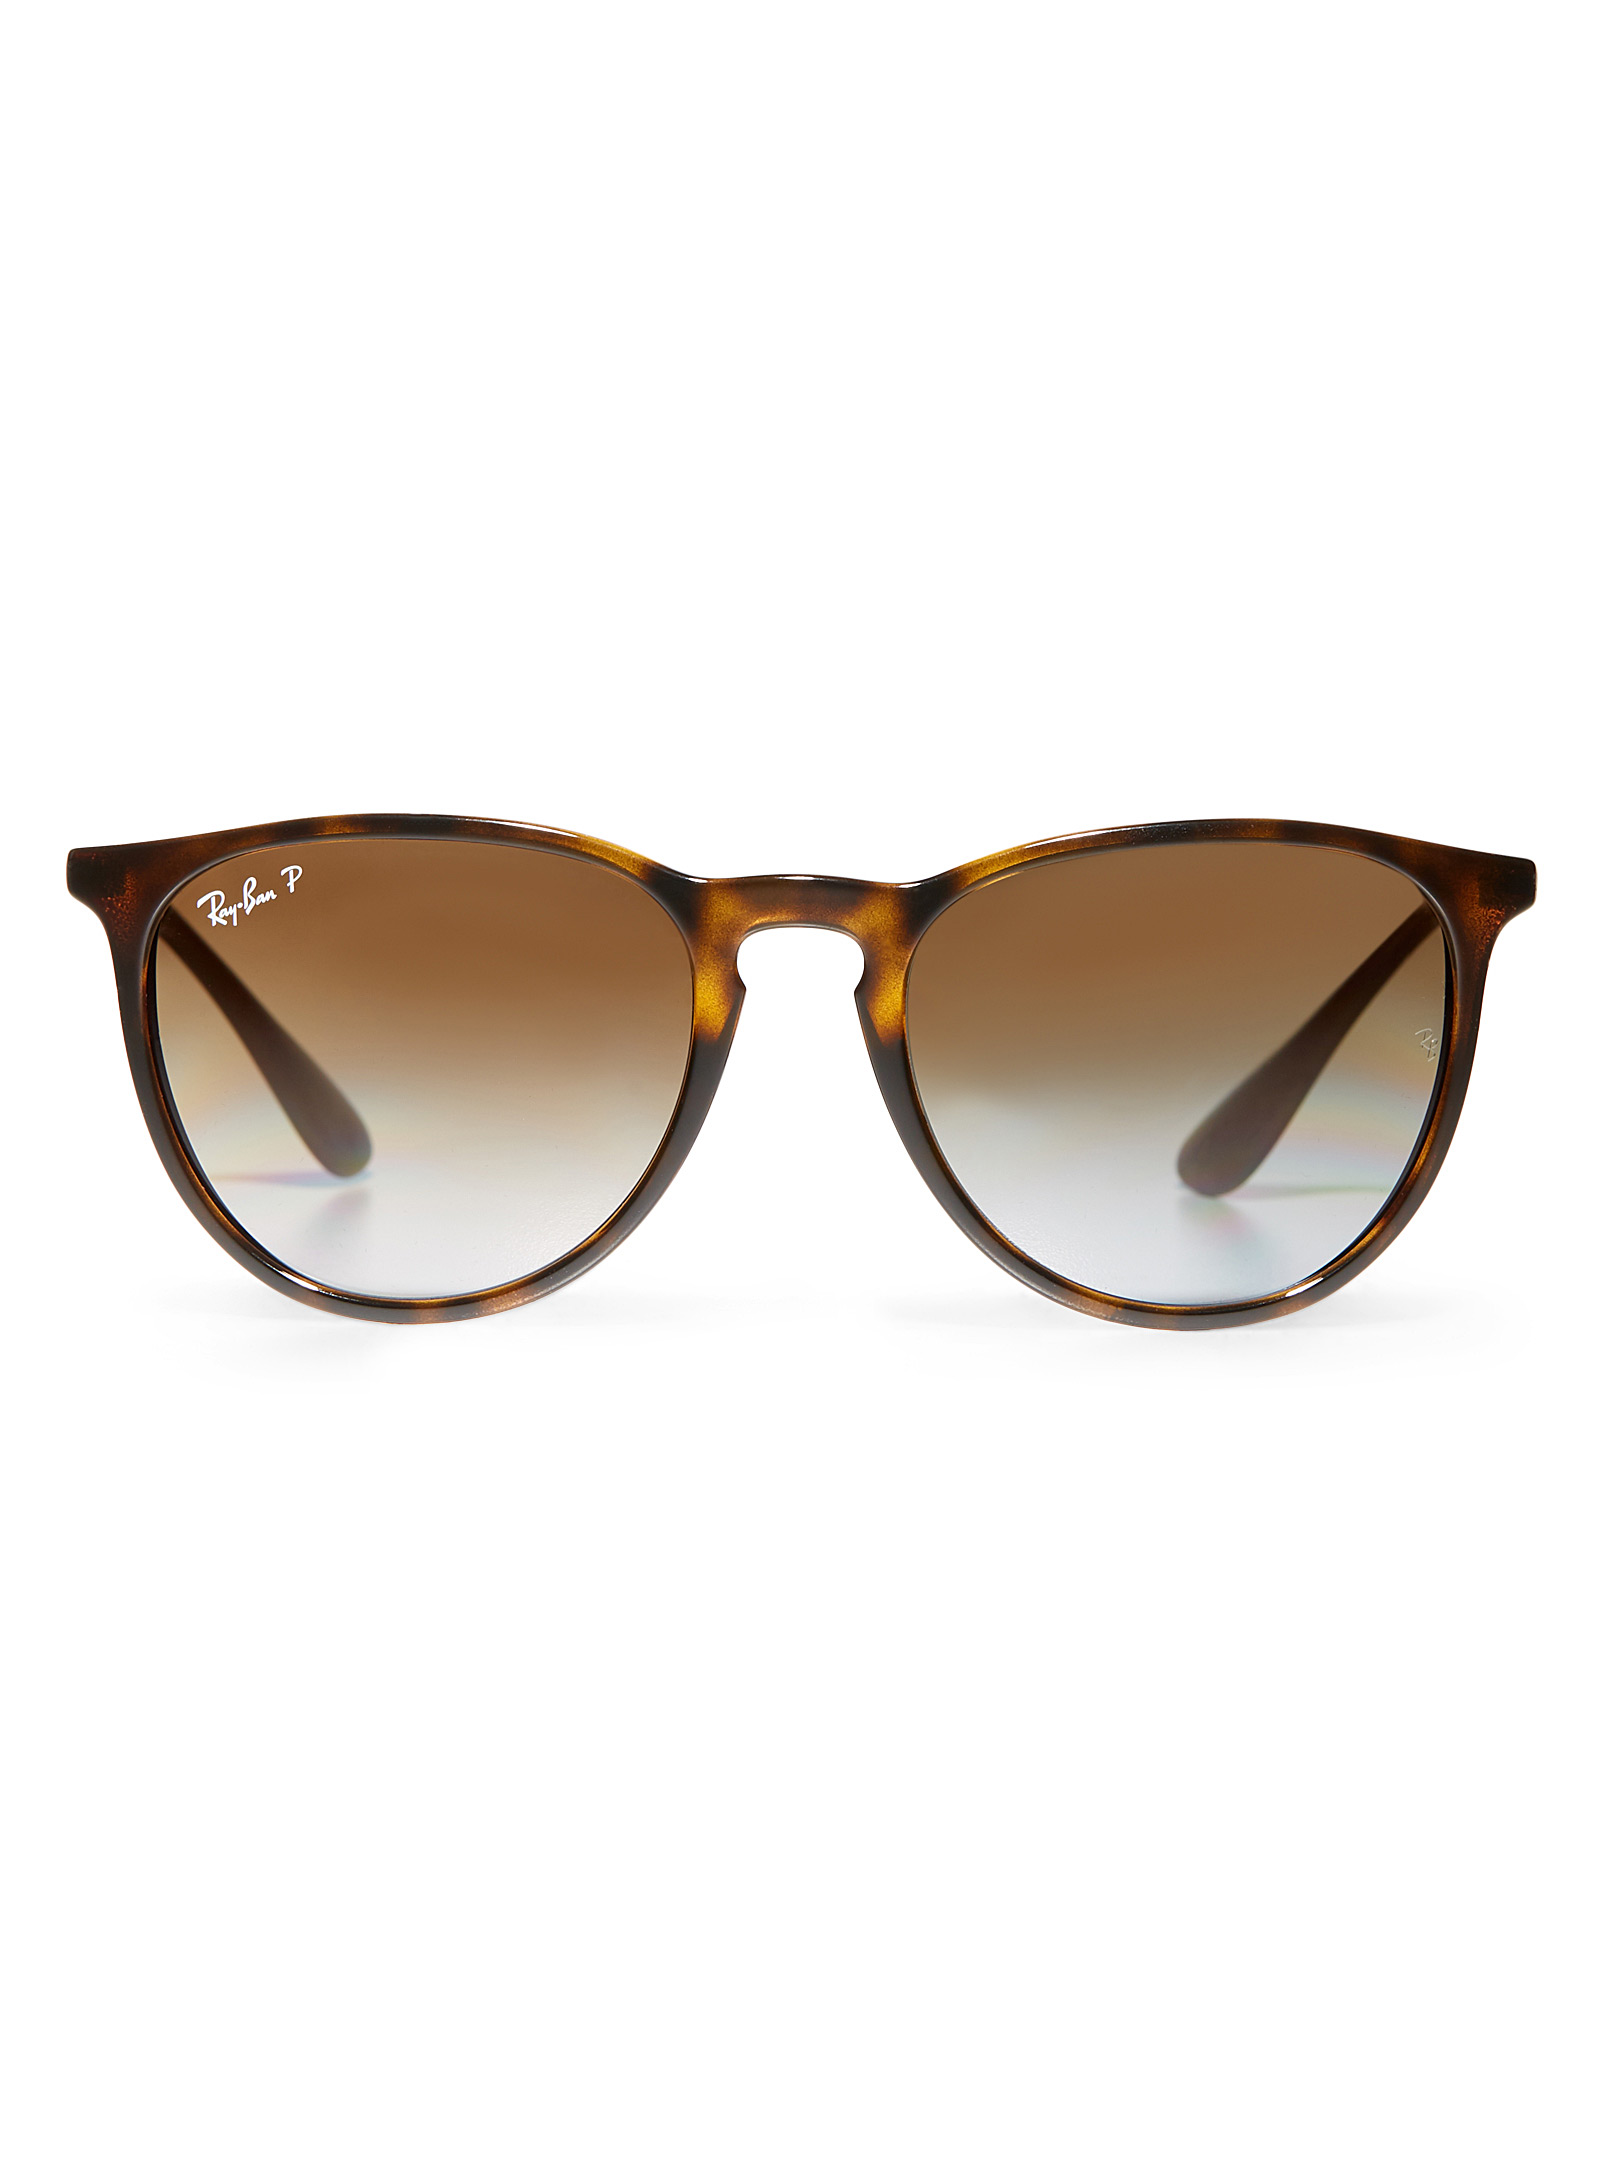 Ray Ban Classic Erika Glossy Sunglasses In Brown